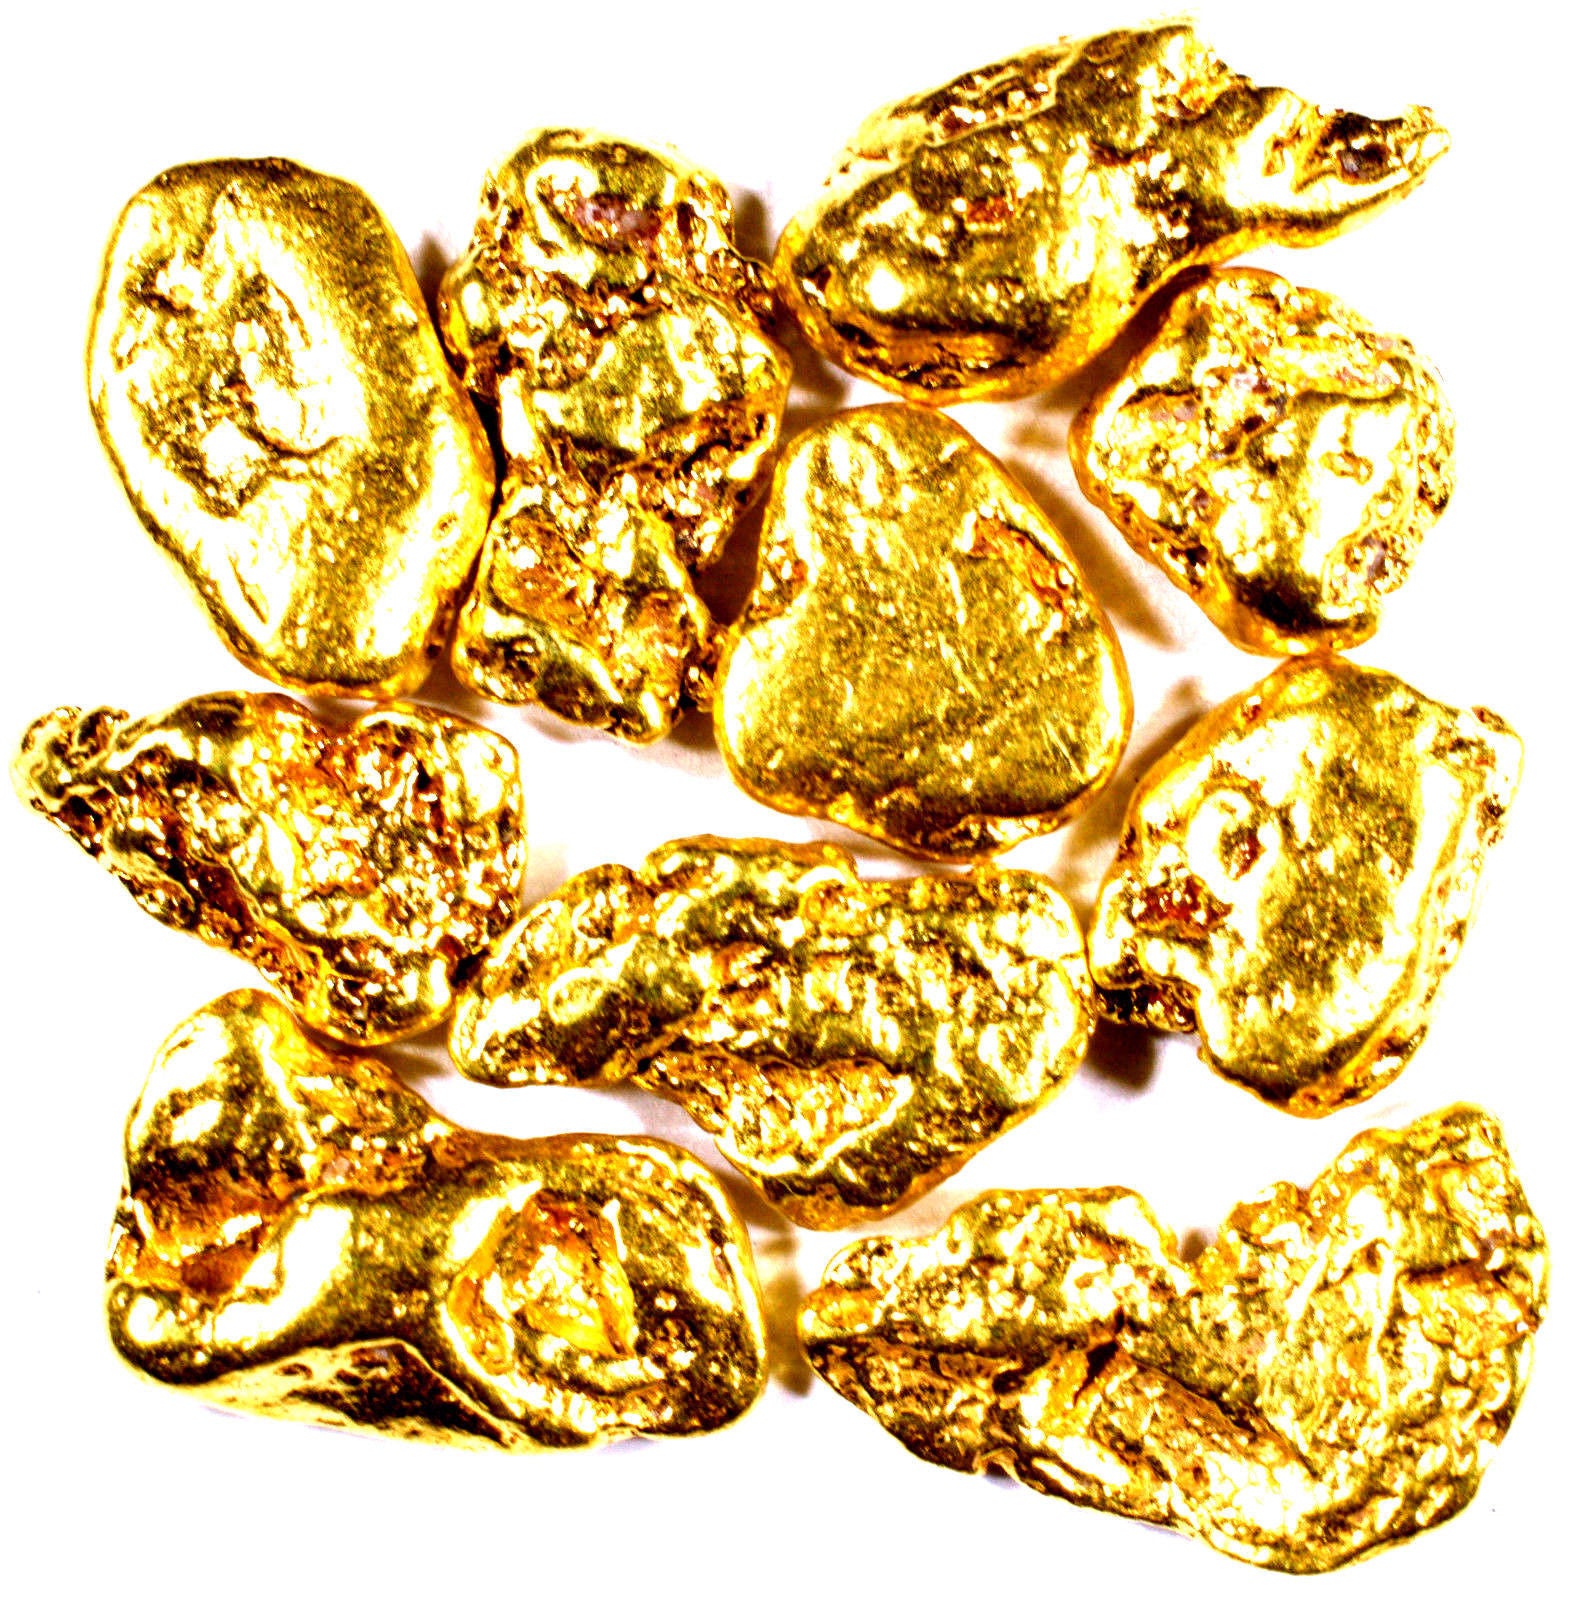 1 TROY OUNCE .999 SILVER BUFFALO BAR BU + 50 PIECE ALASKAN PURE GOLD NUGGETS - Liquidbullion